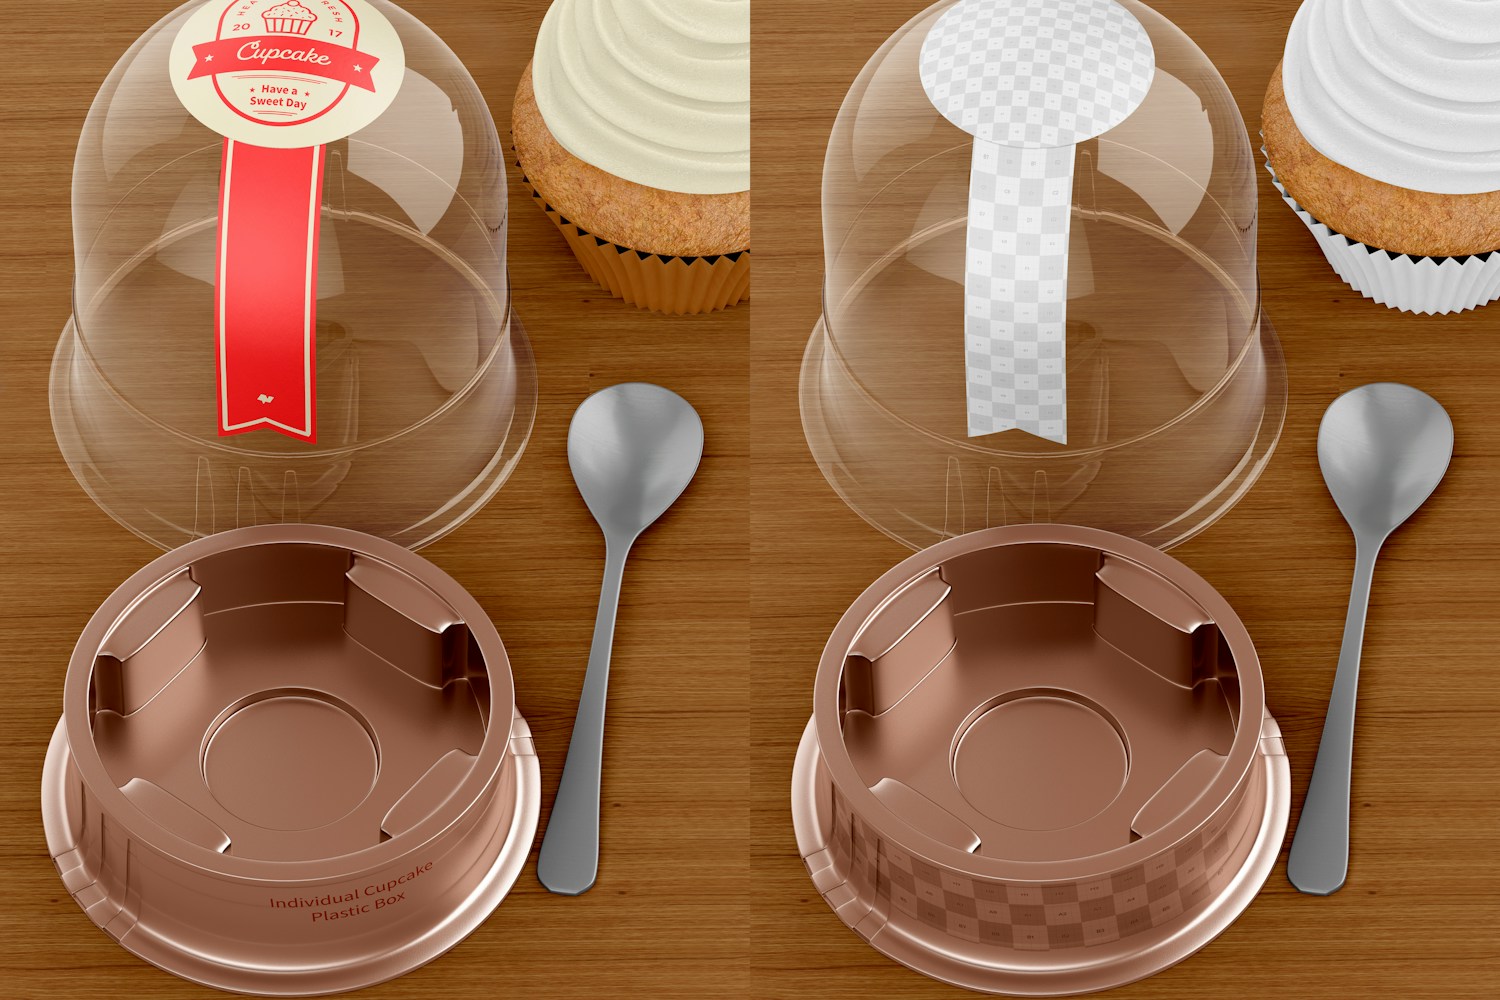 Individual Cupcake Plastic Box with Spoon Mockup